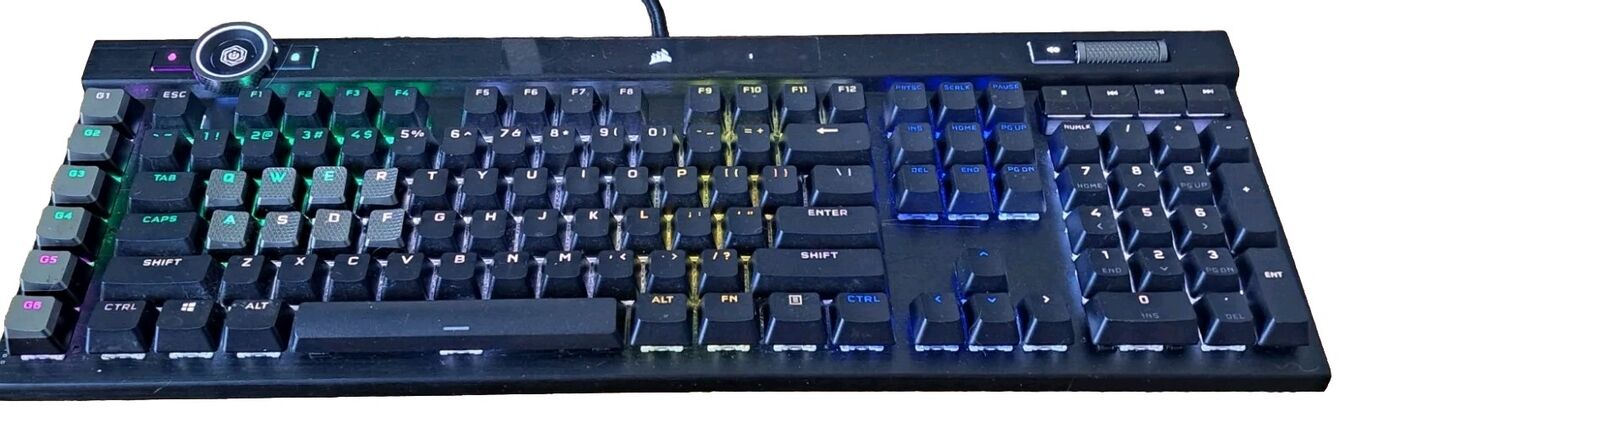 Corsair K100 RGB Optical-Mechanical Gaming Keyboard - Black Ex Condition 